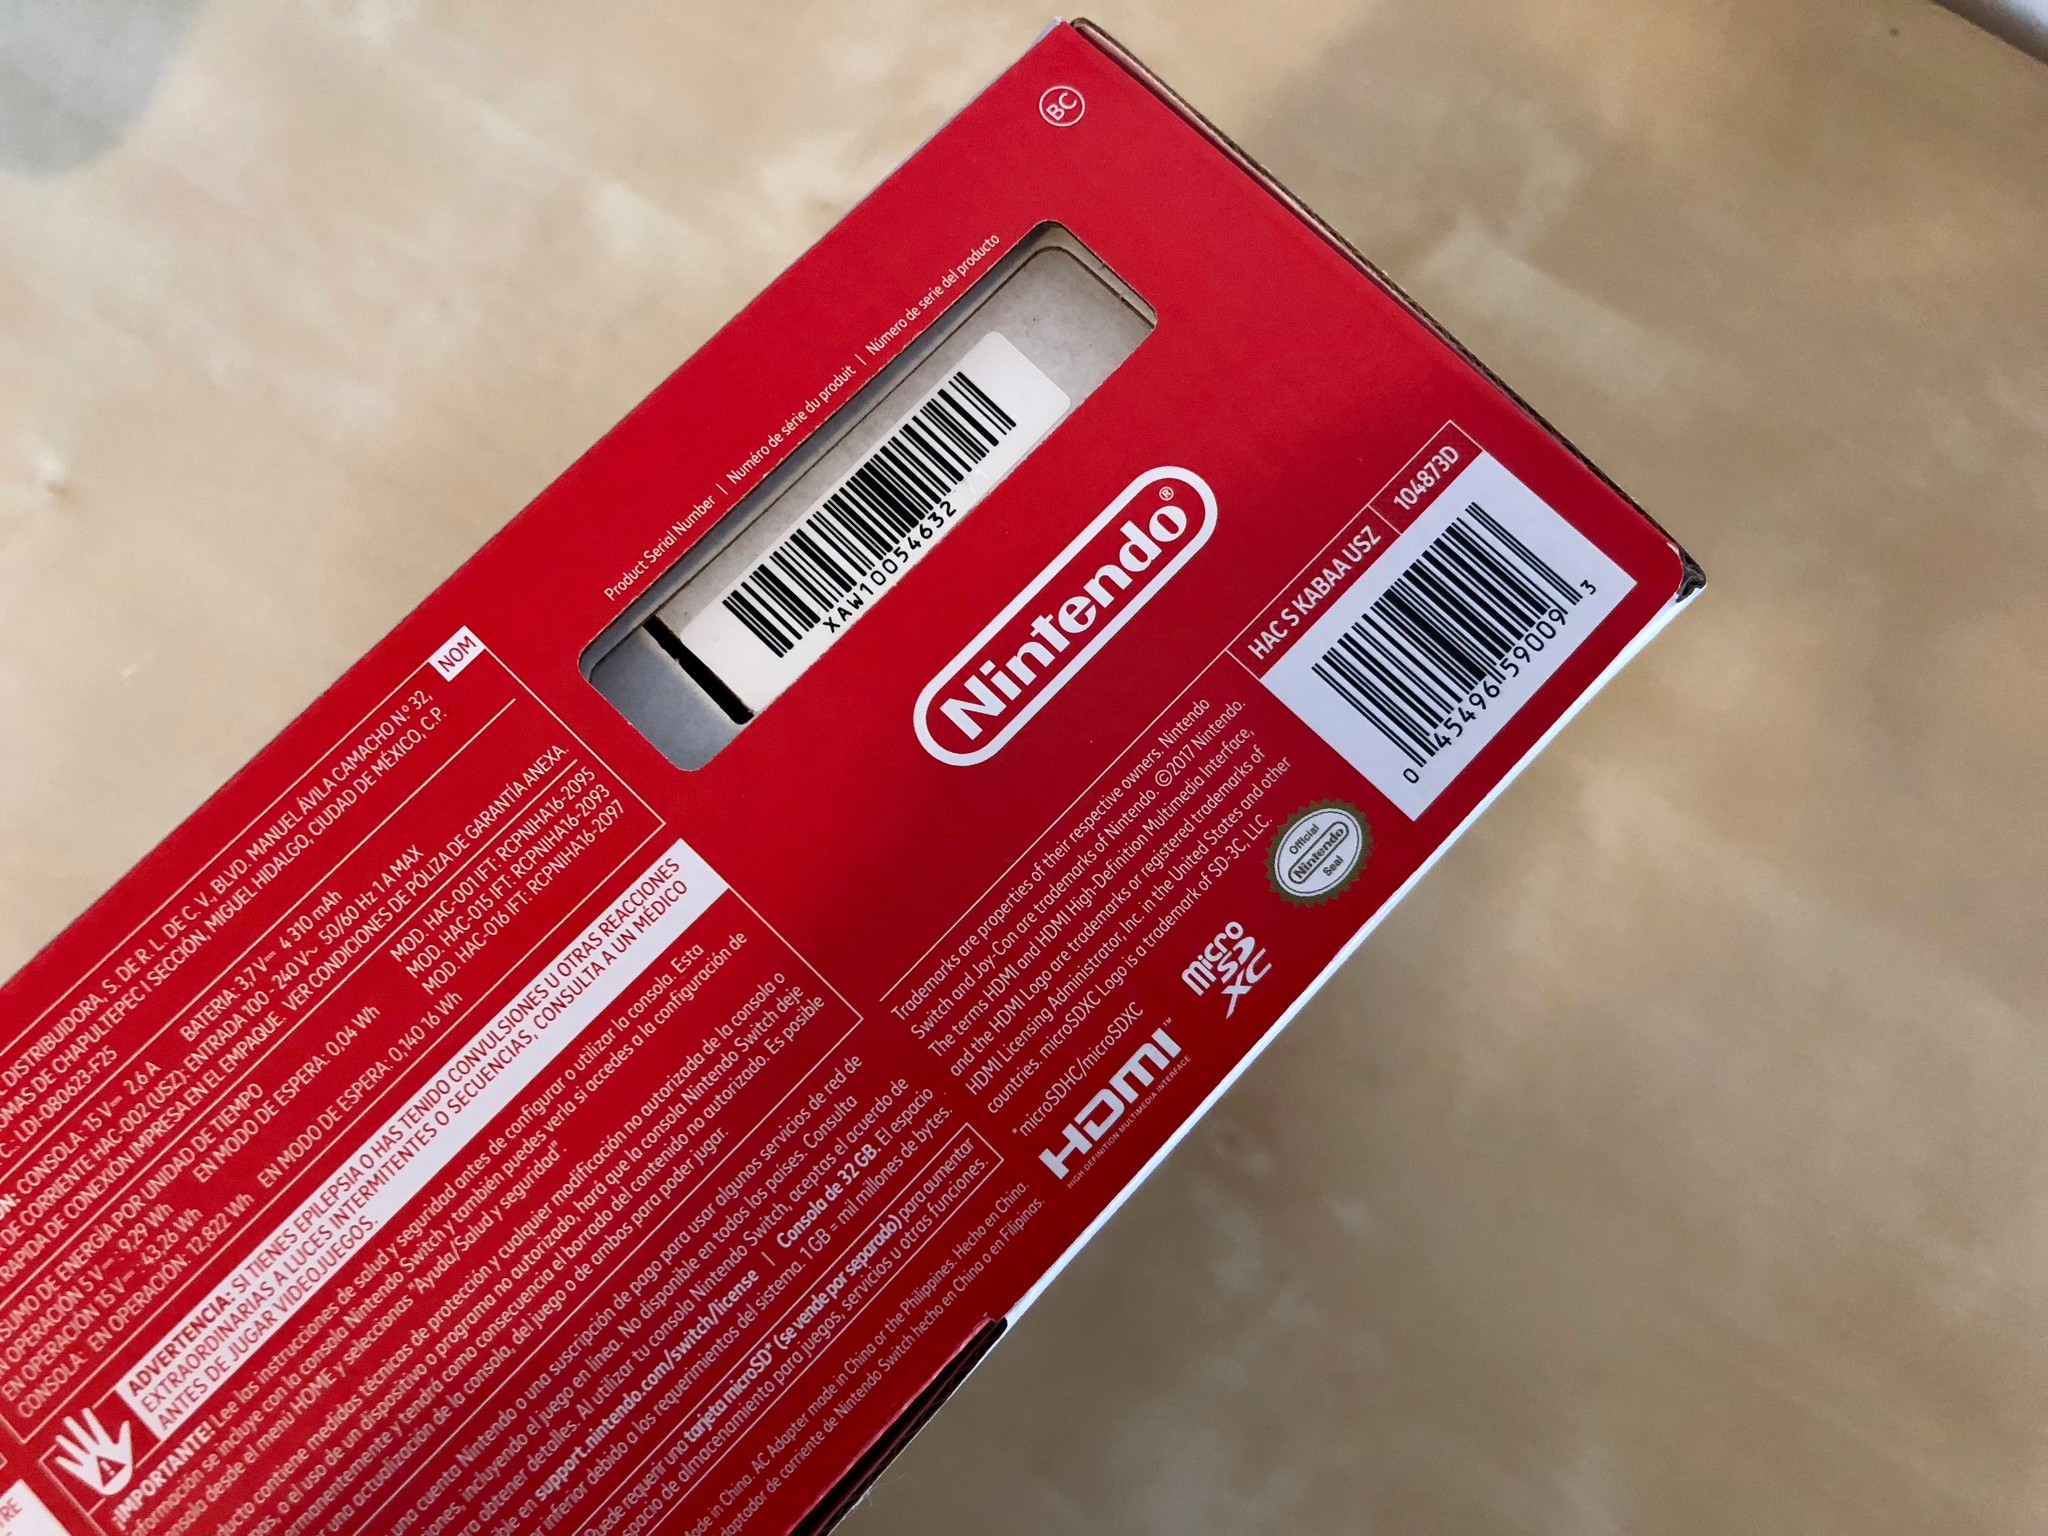 Nintendo v2. Серийный номер Nintendo Switch. Nintendo Switch Lite серийный номер. Серийник Нинтендо свитч. Серийный номер на коробке Нинтендо.